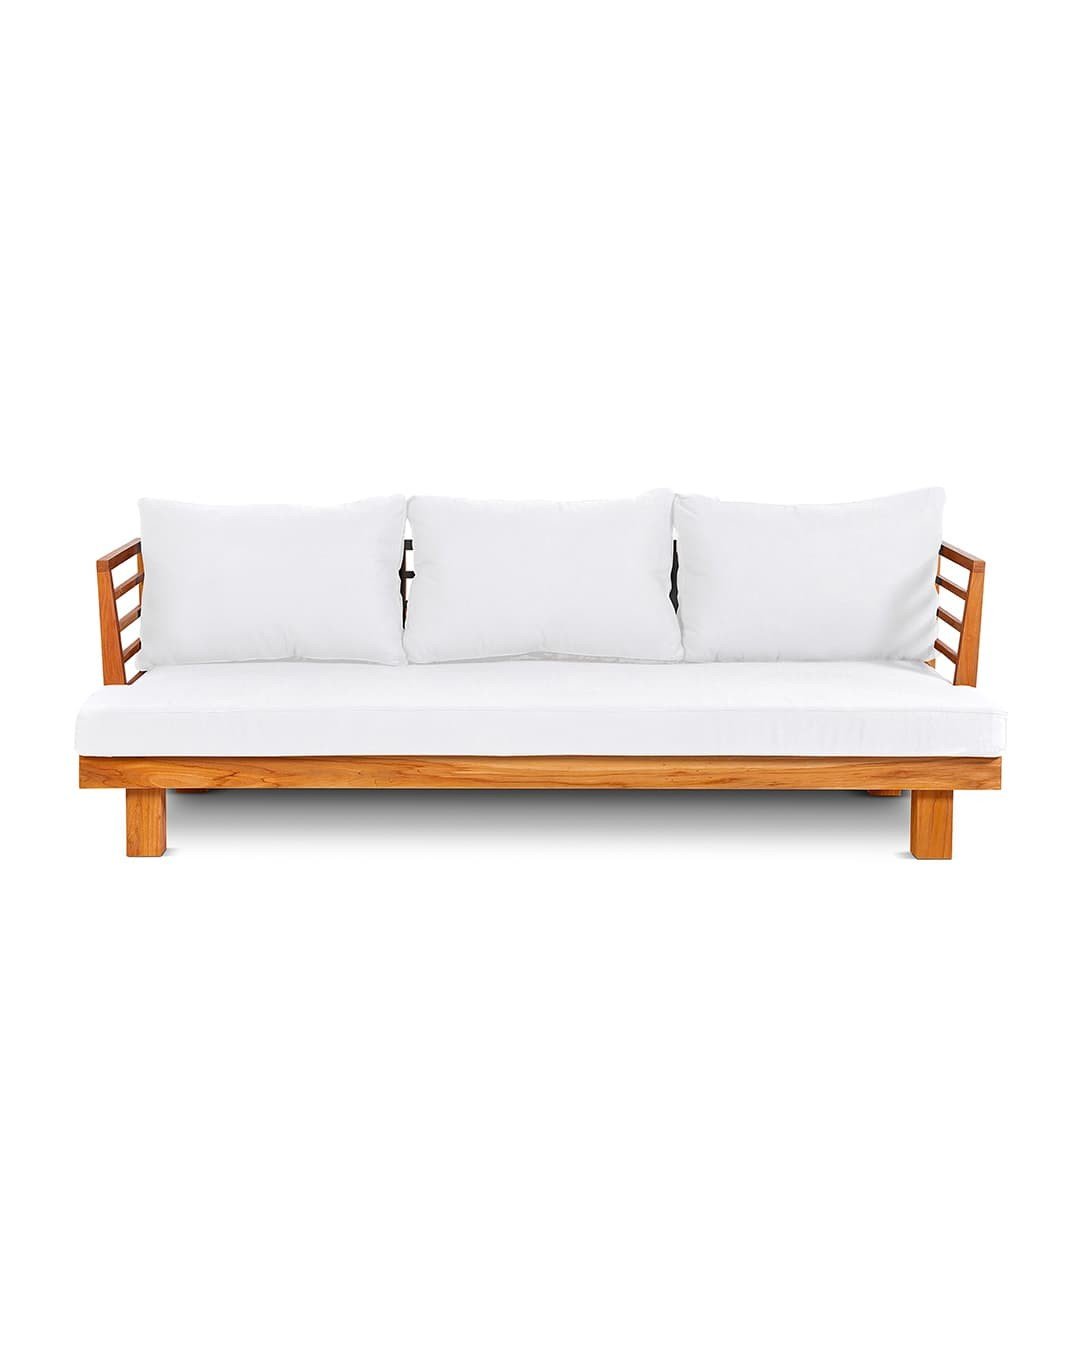 Copy of Beautiful 3-person teak sofa